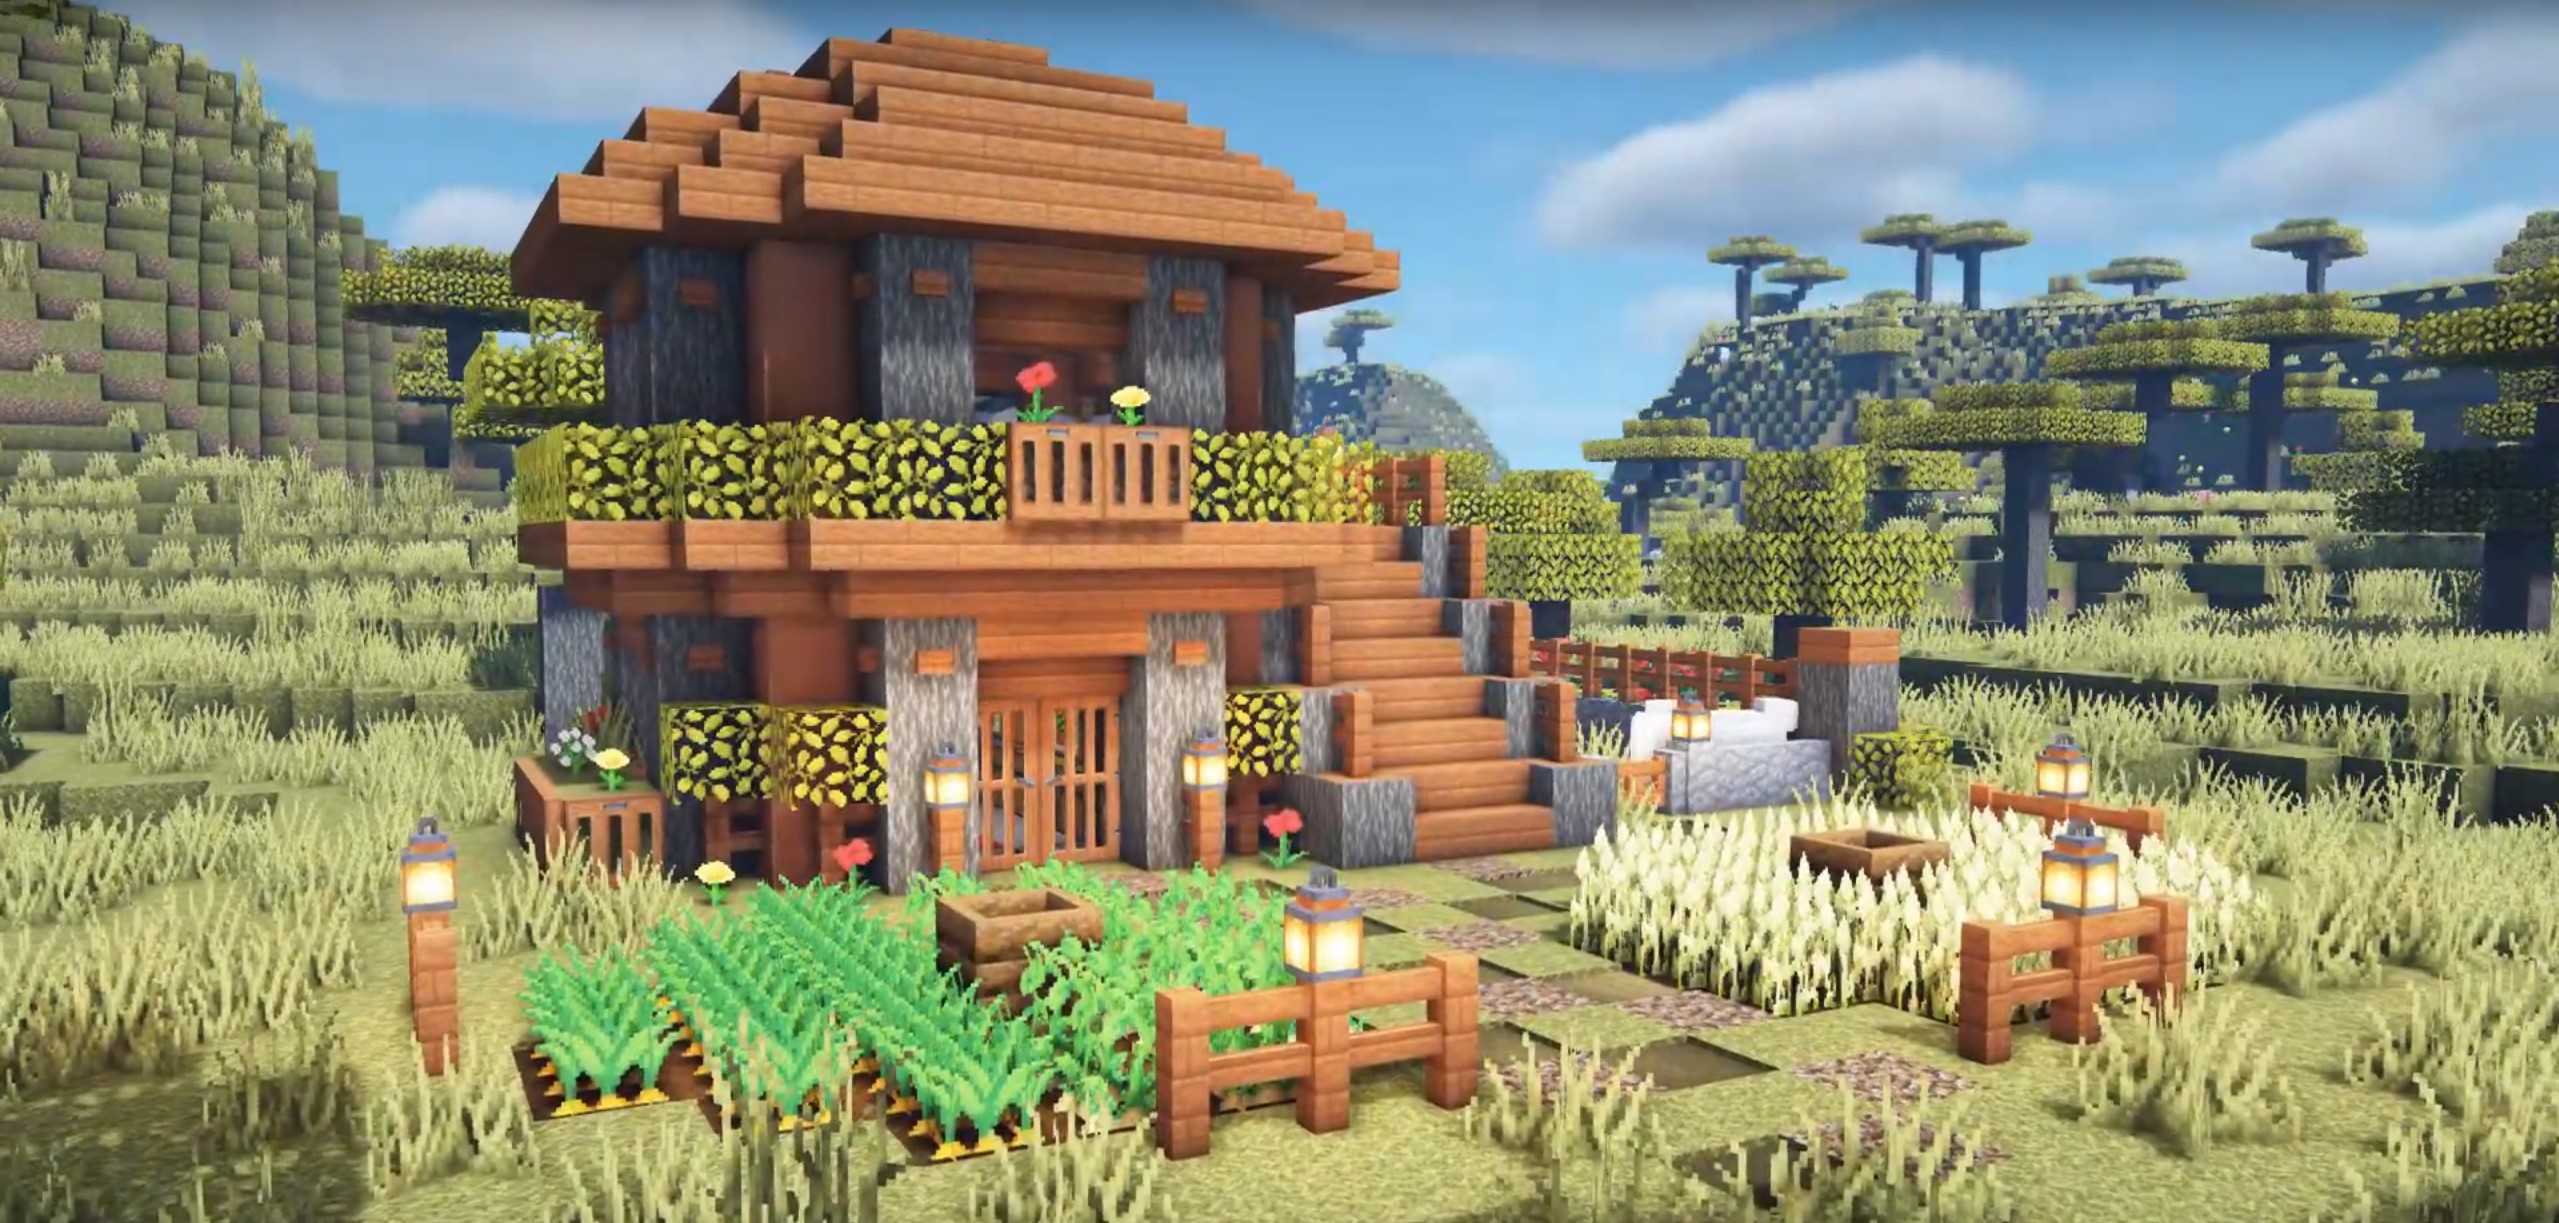 Savanna House minecraft building idea